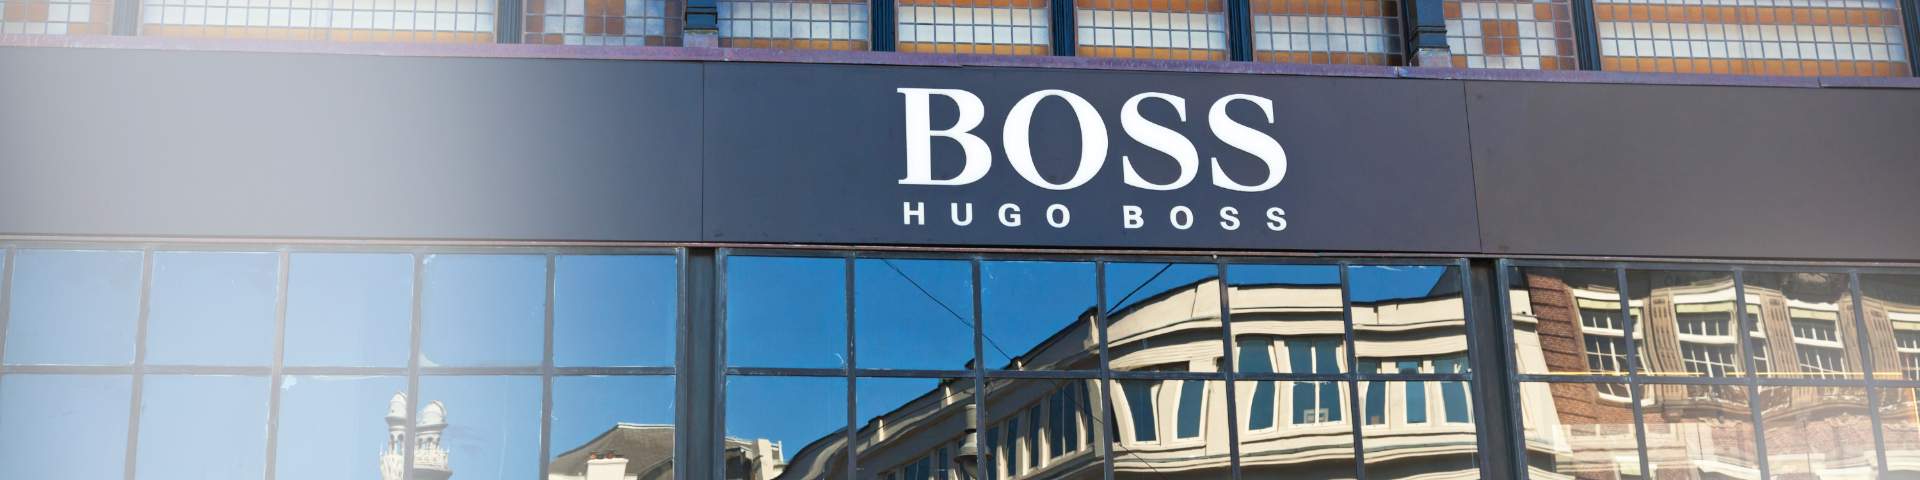 HUGO BOSS: A Worldwide Leading Luxury Brand - KPS